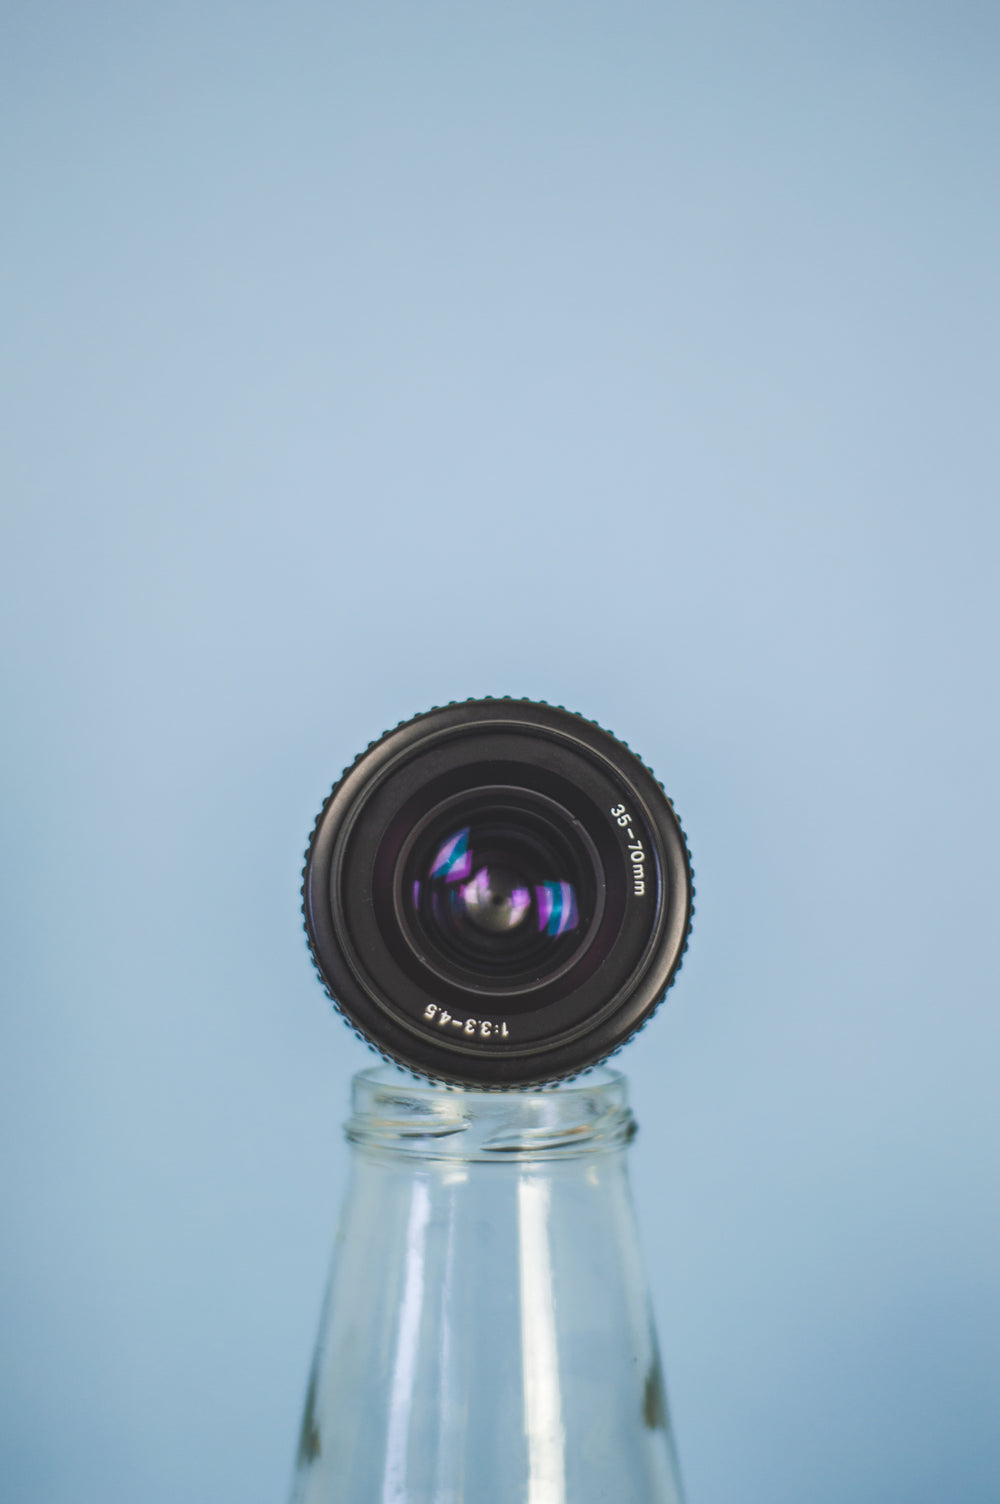 camera lens propped on a bottle